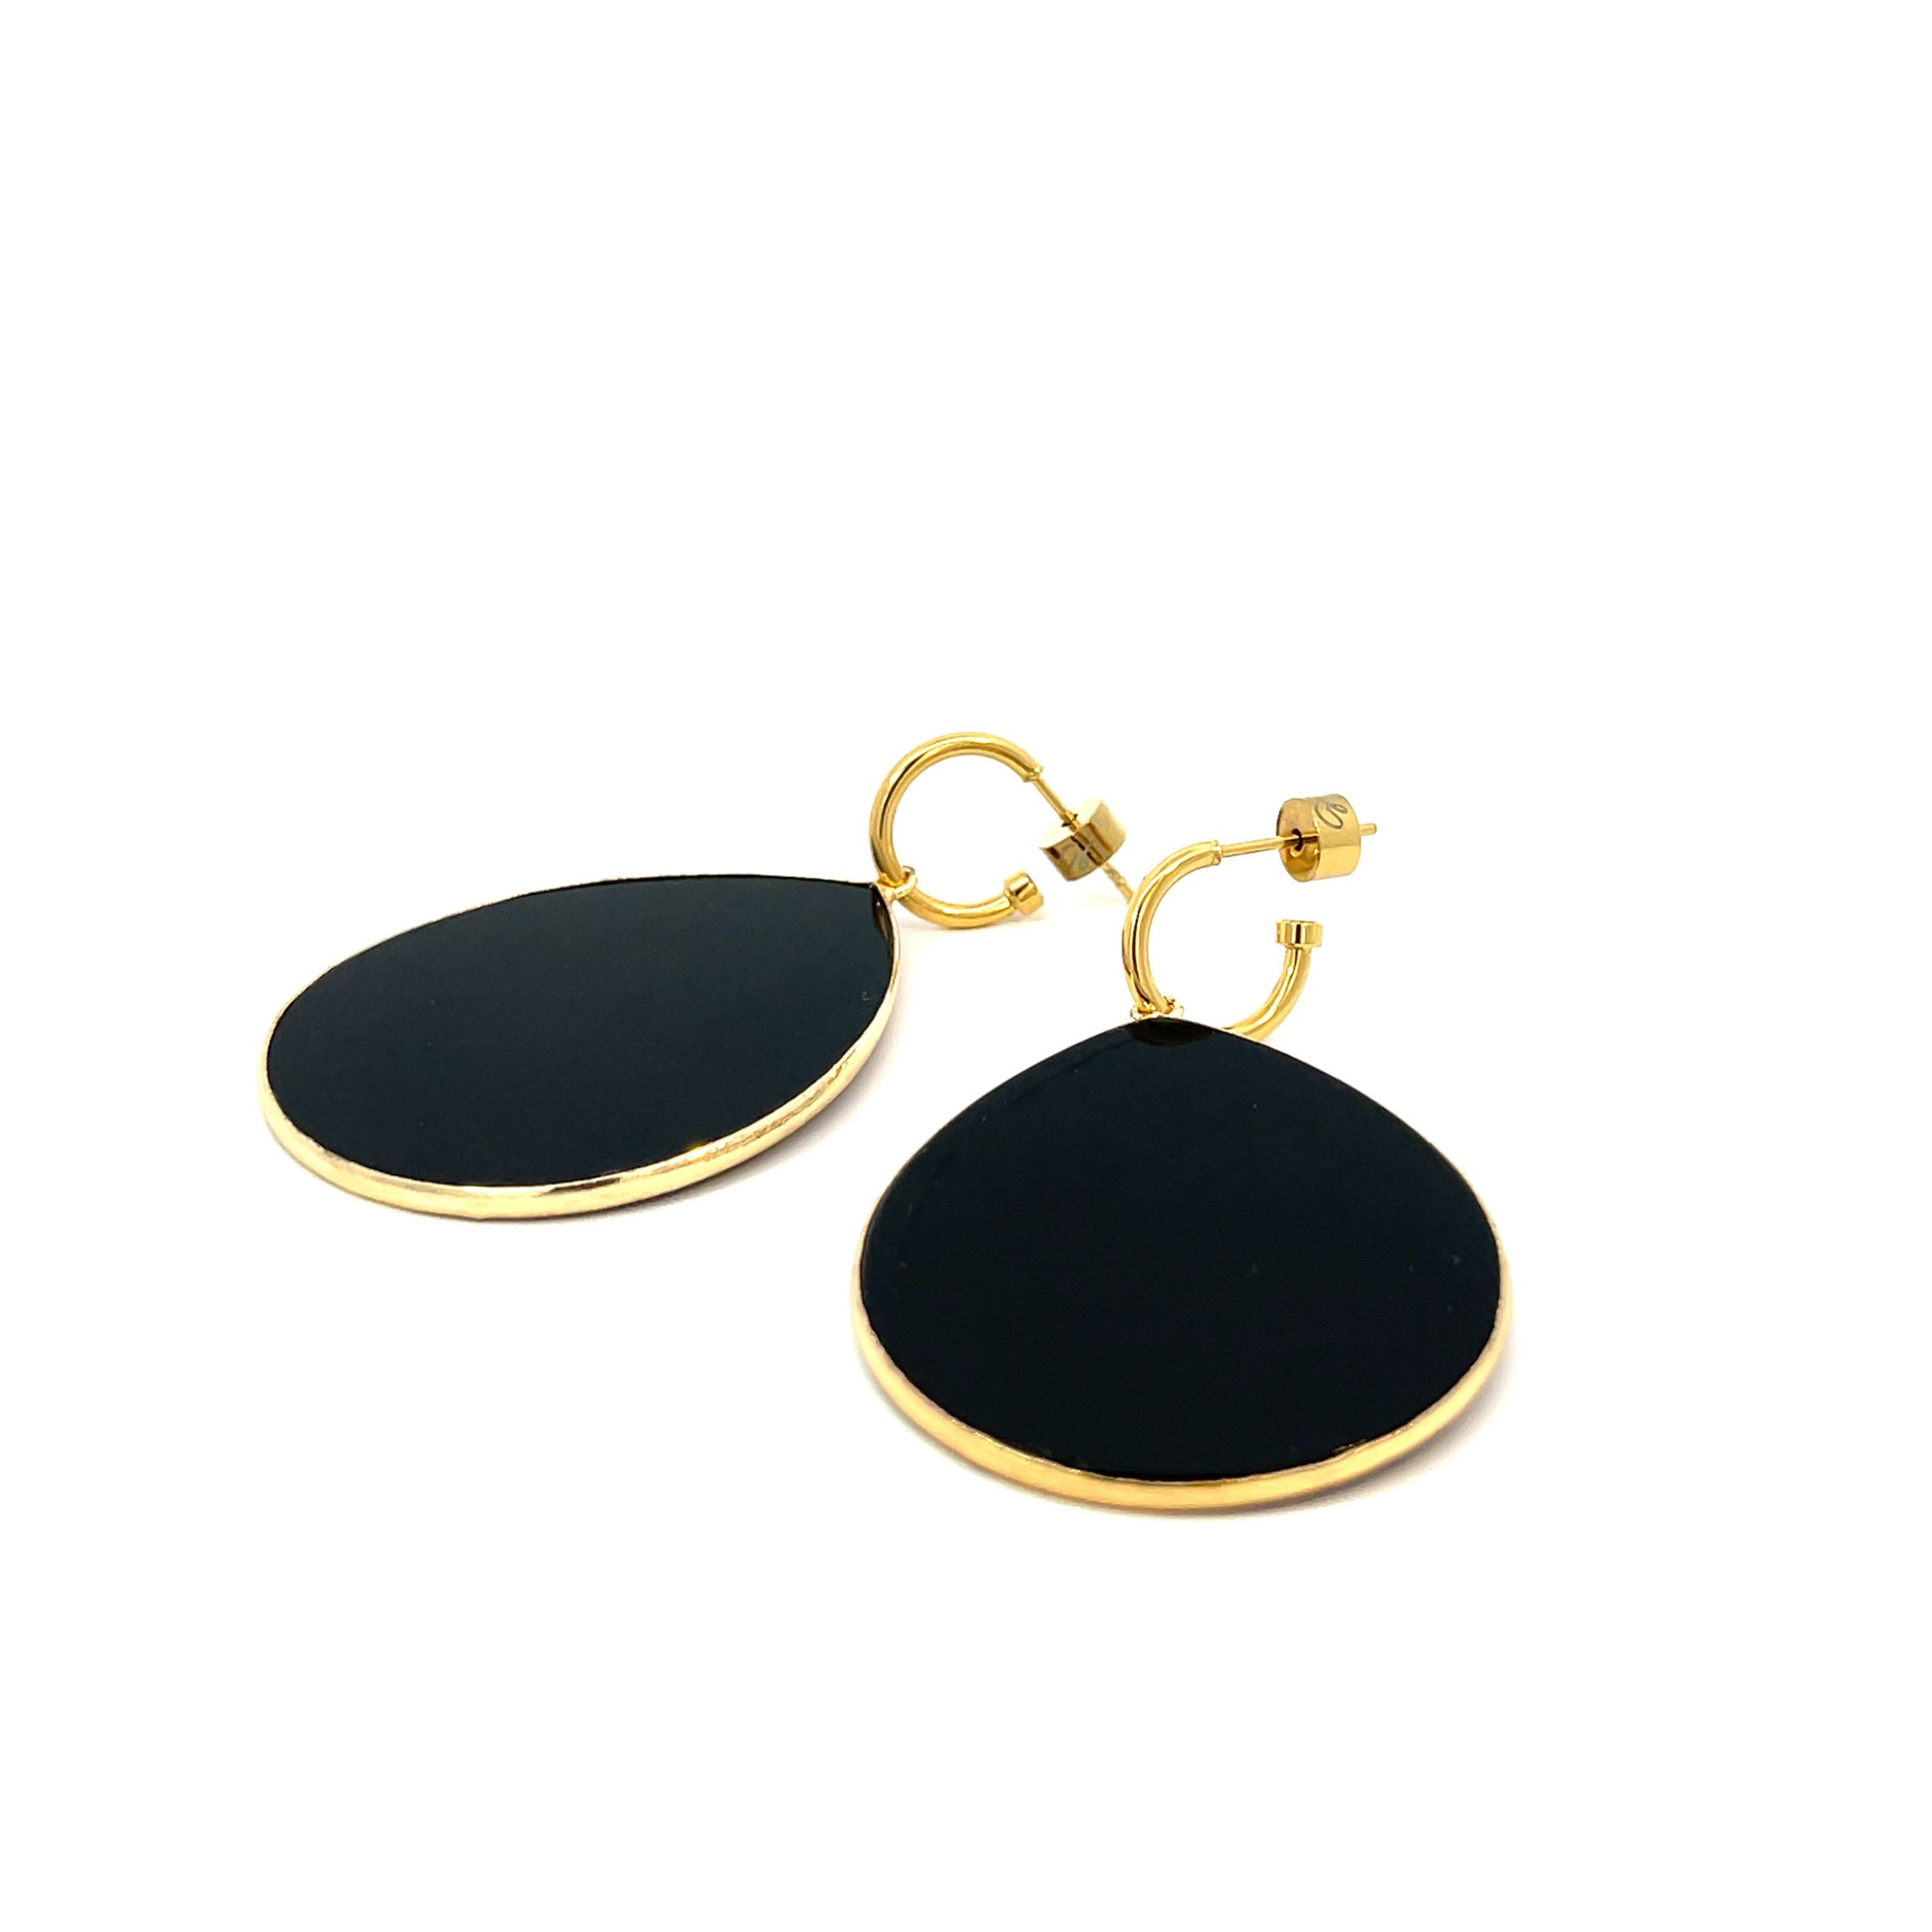 Grounded Black Obsidian Earrings by Gosia